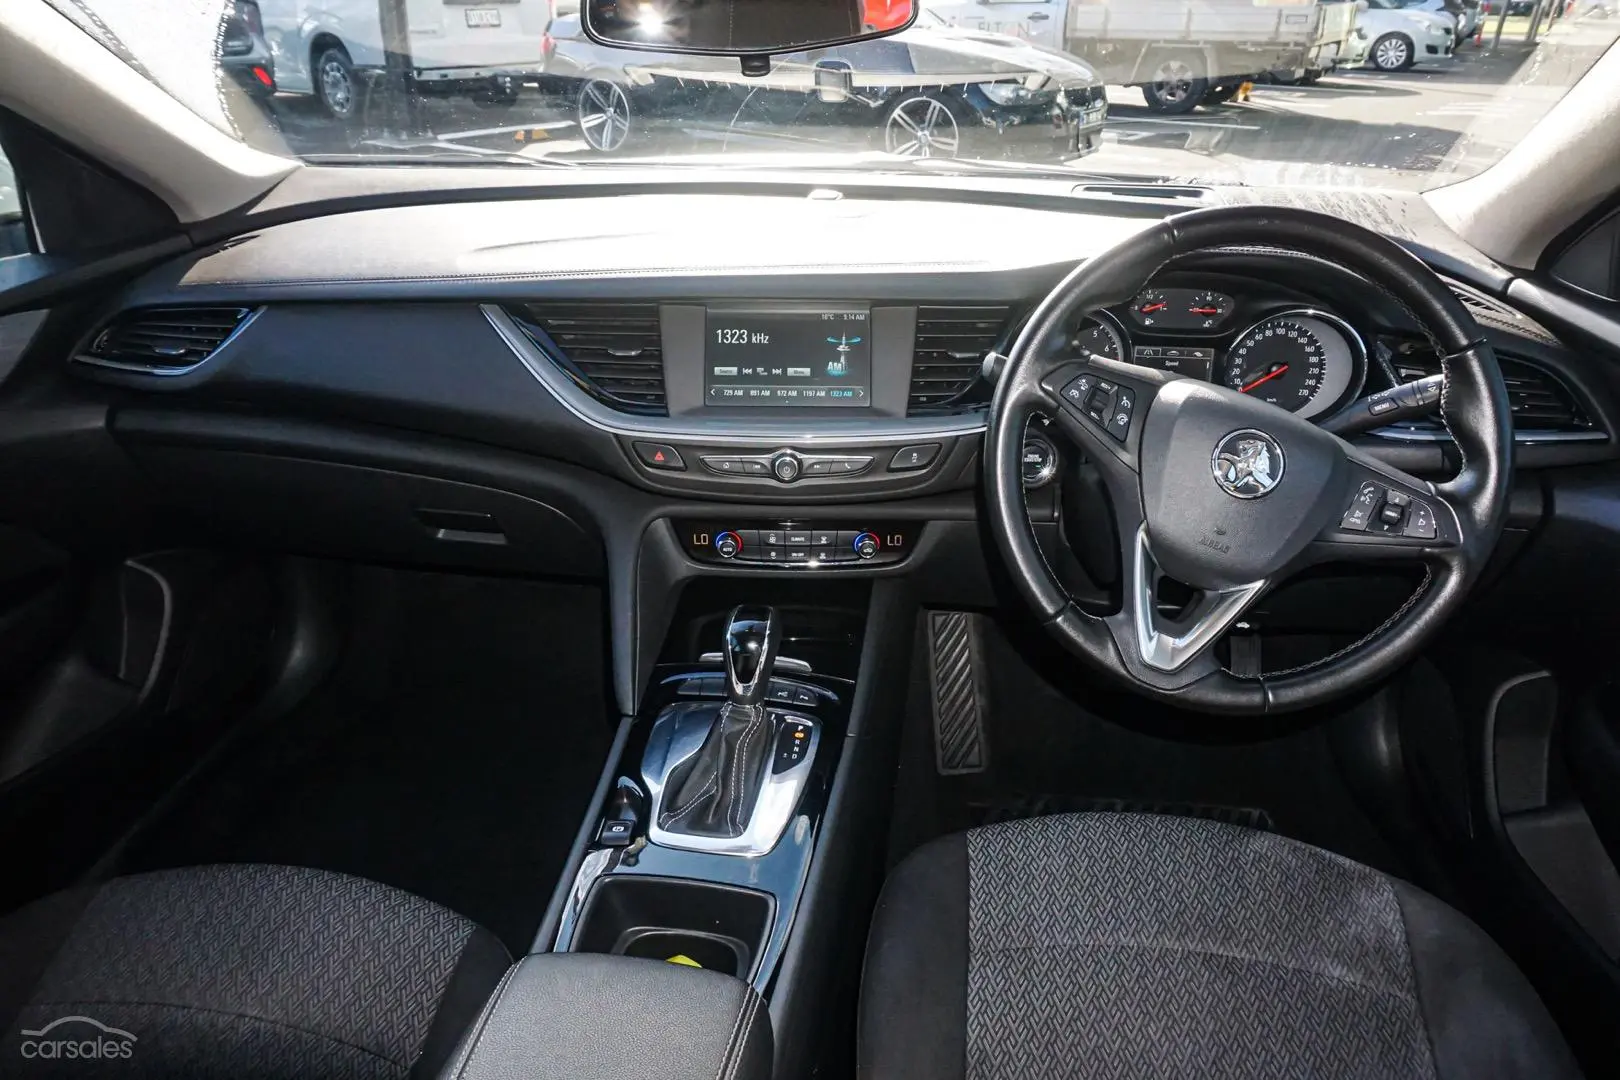 2018 Holden Commodore Image 9